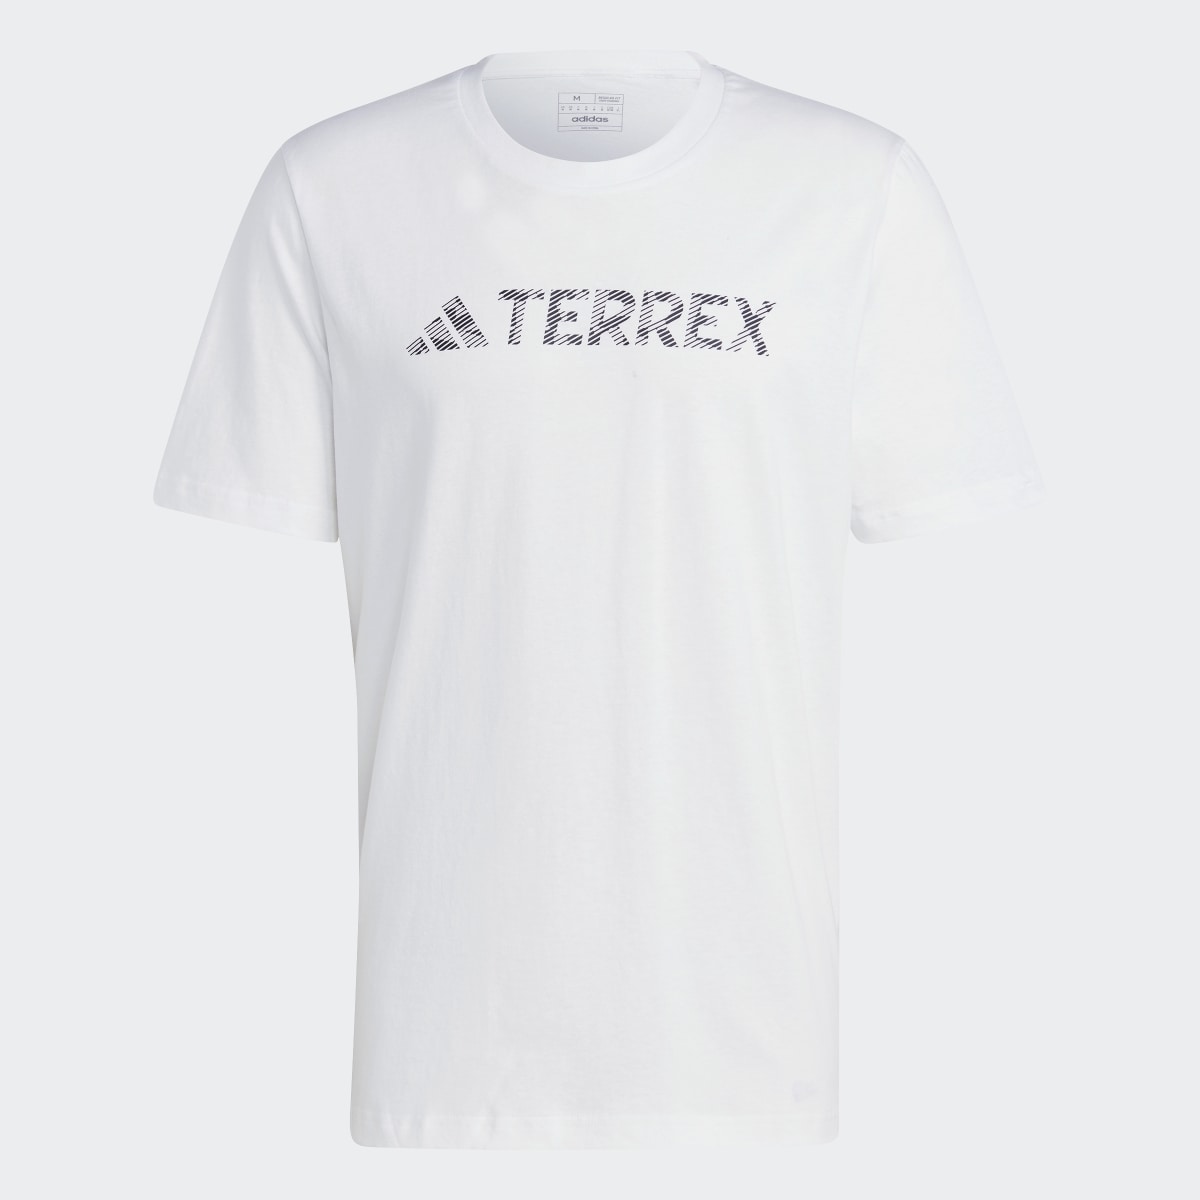 Adidas Terrex Classic Logo T-Shirt. 5